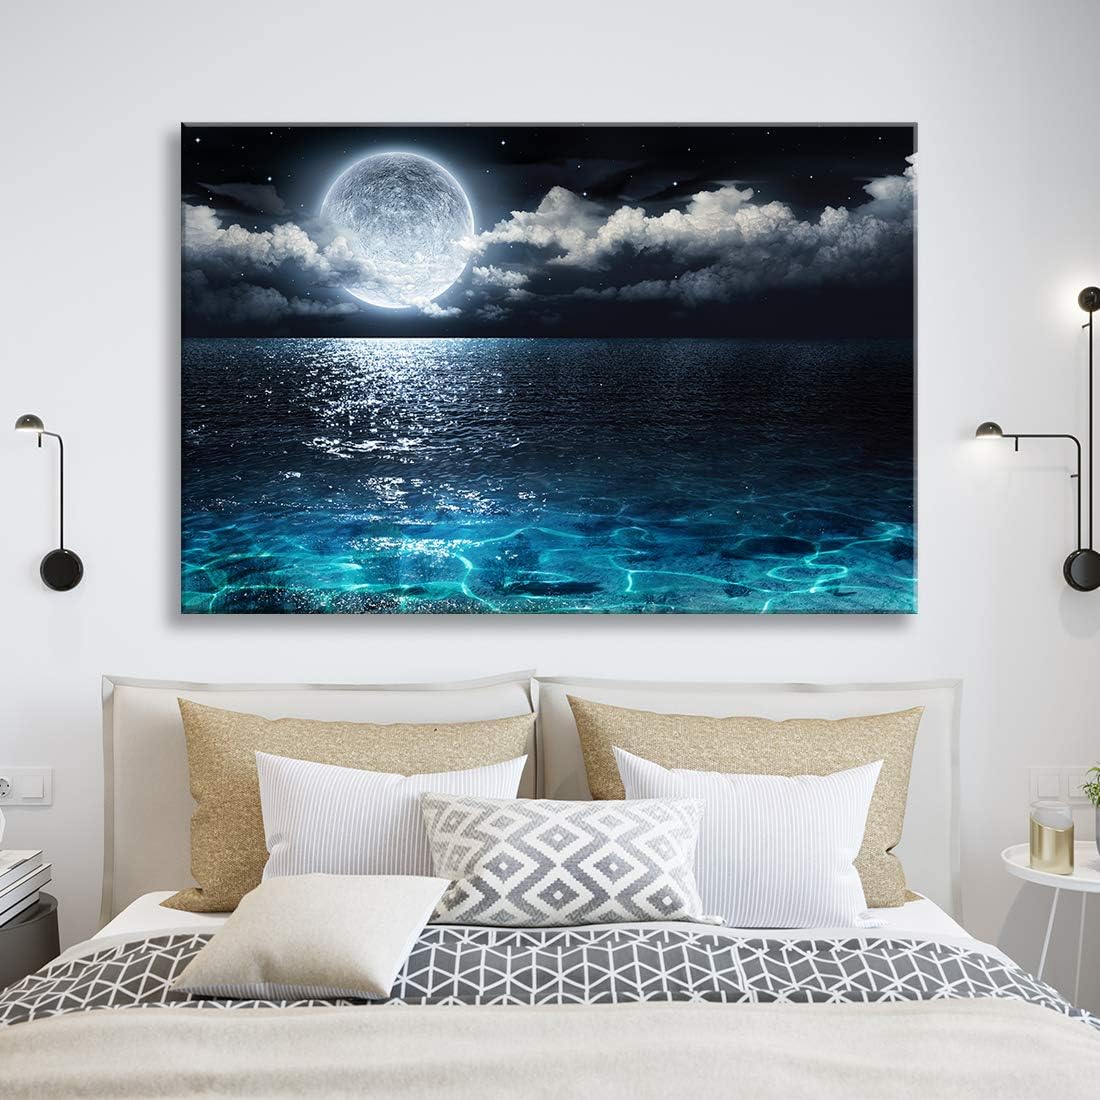 Brusheslife Ocean Theme Wall Art - Calmful Night Seascape, Moonlit Blue Sea Canvas, Ready to Hang Nature Decor